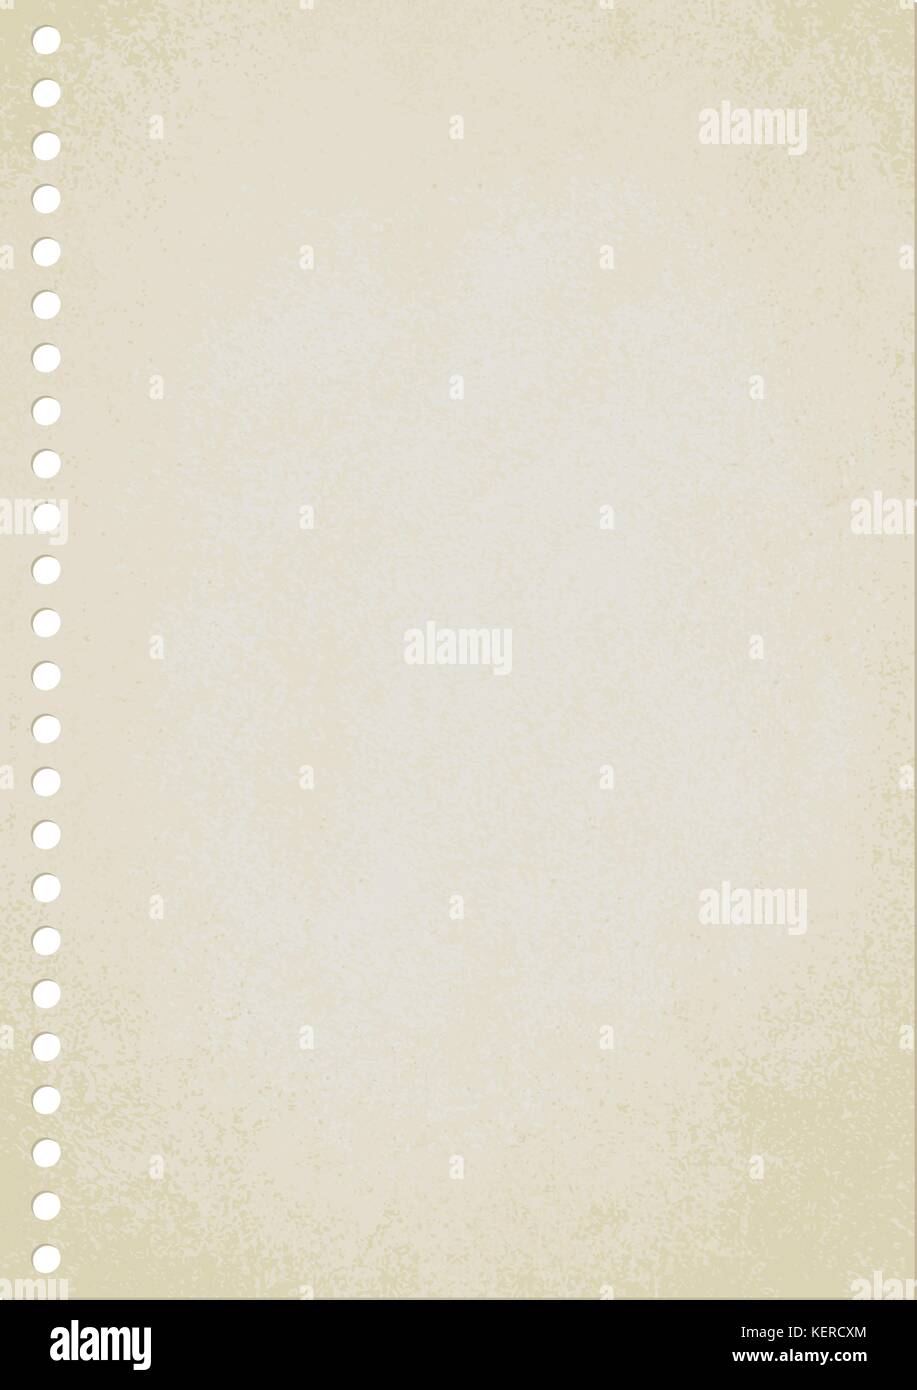 Empty vintage paper sheet vector background. Stock Vector